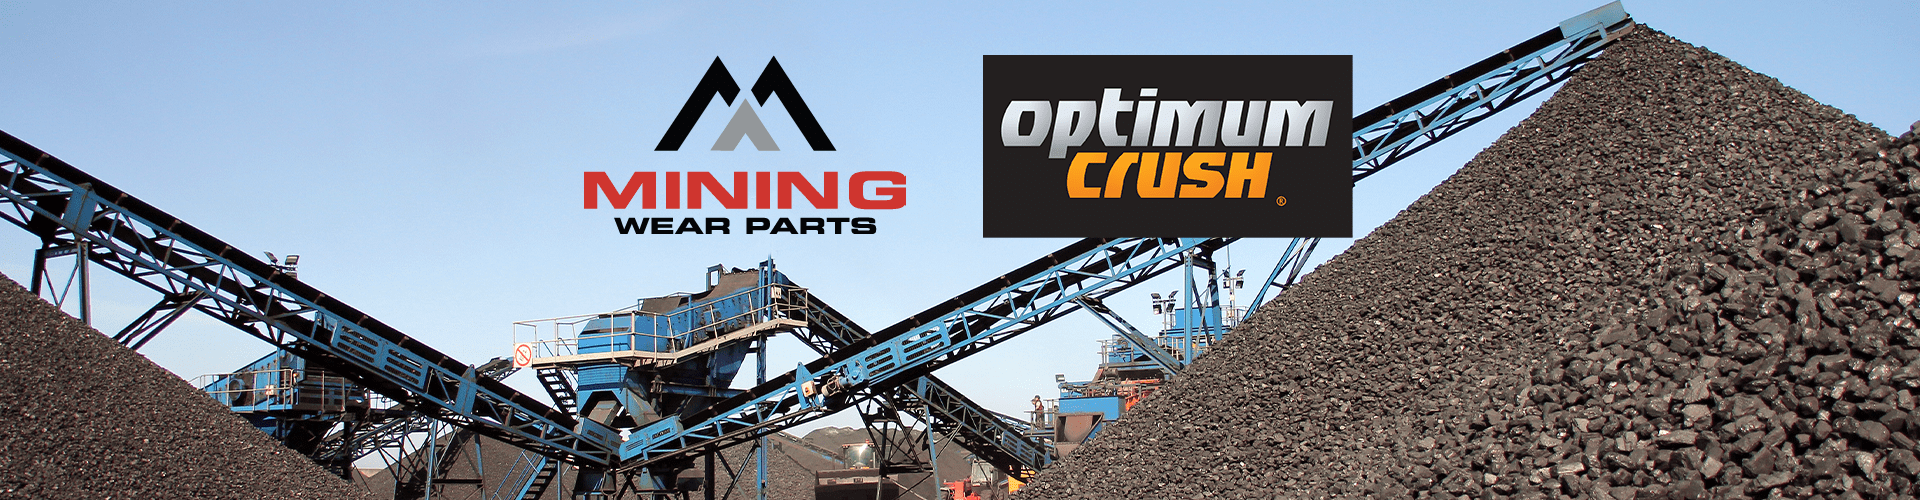 Optimum Crush Partners with Mining Wear Parts